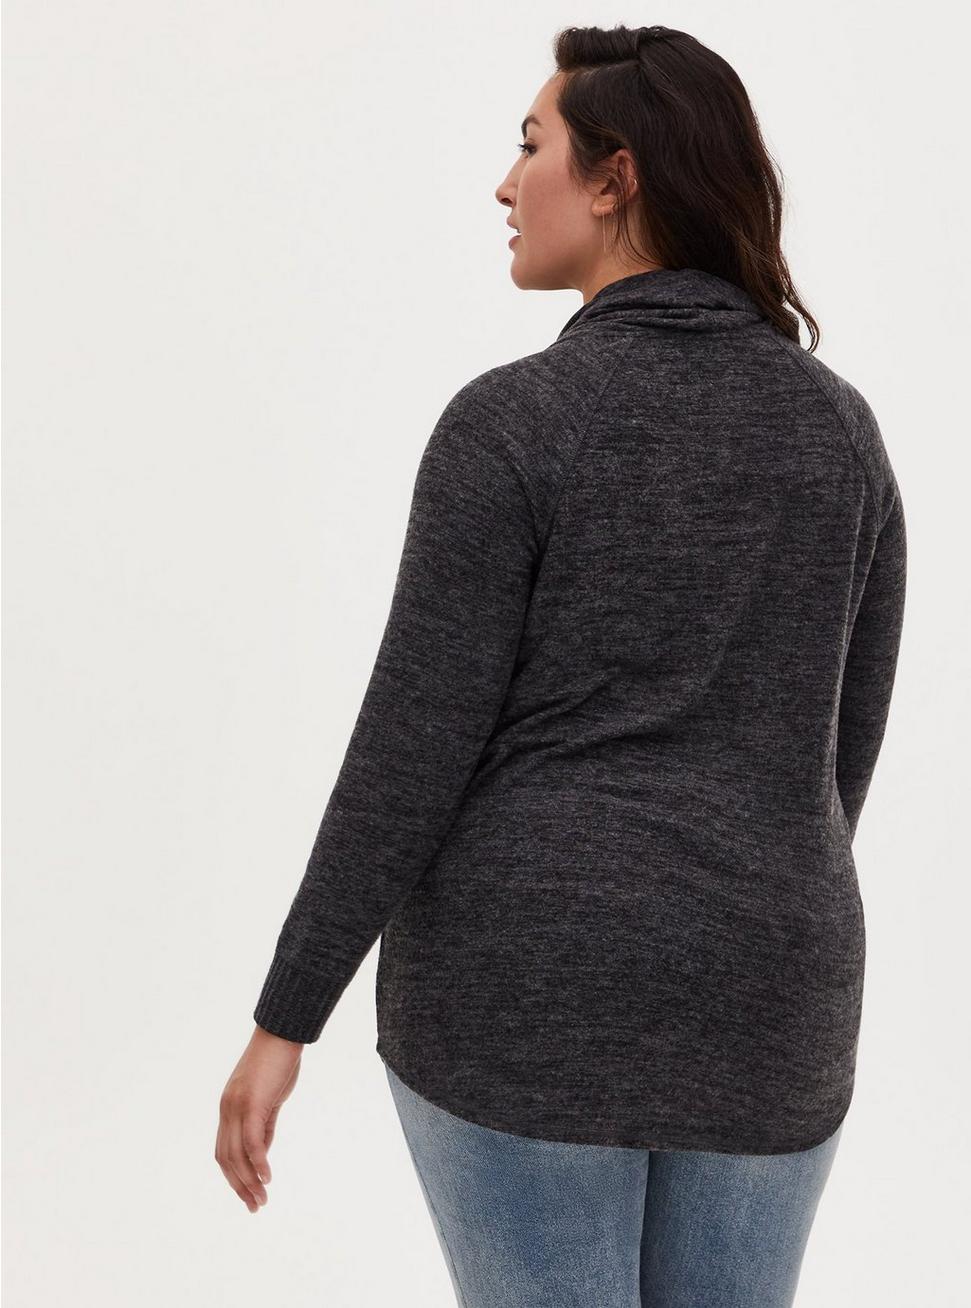 Plus Size Super Soft Plush Cowl Neck Raglan Tunic Sweatshirt, DEEP BLACK, alternate